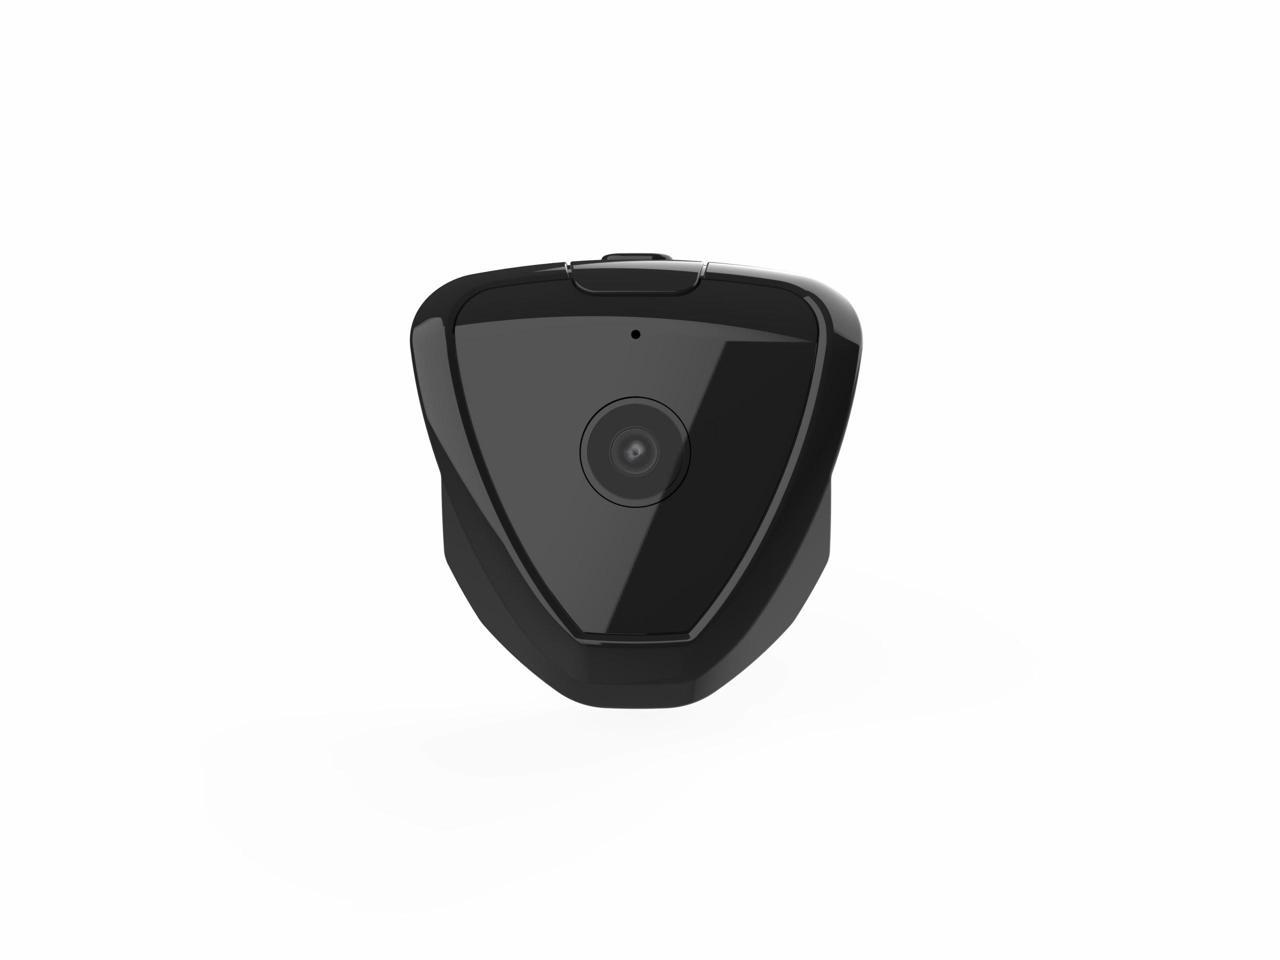 TOKK Cam S6 - Discreet Mini Day/Night Vision Camera